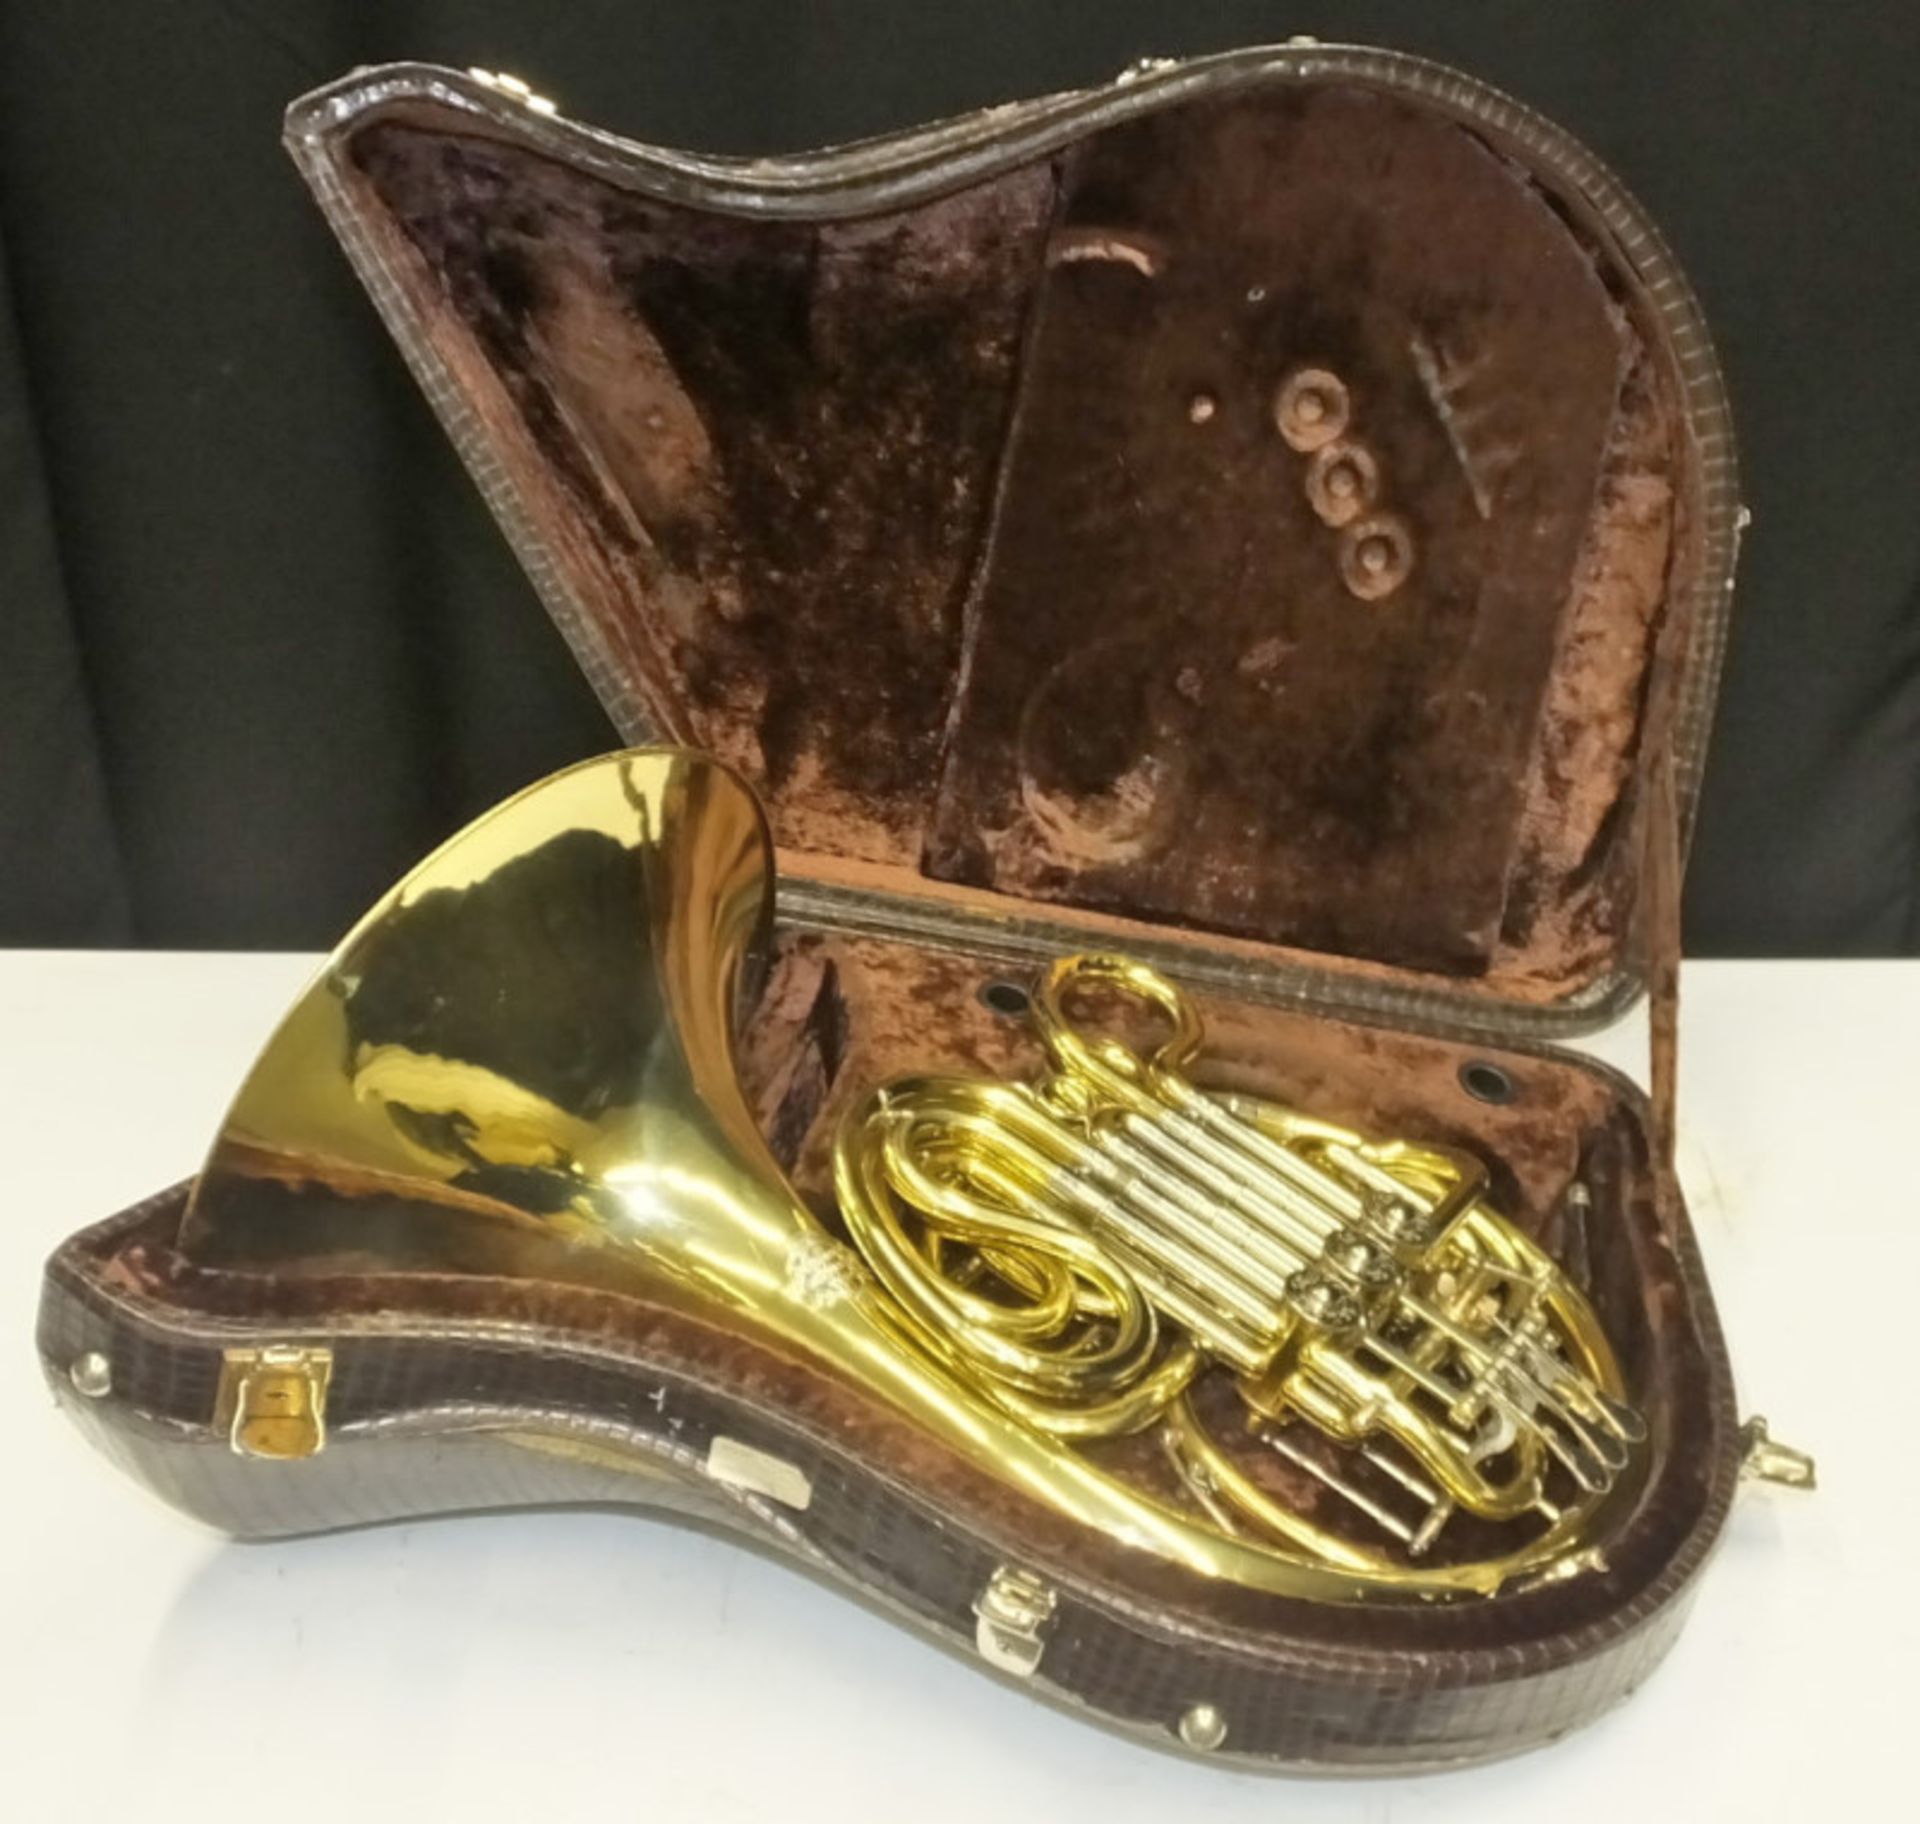 Gebr Alexander Mainz Mod 103 French Horn in case - Serial Number - 18408.